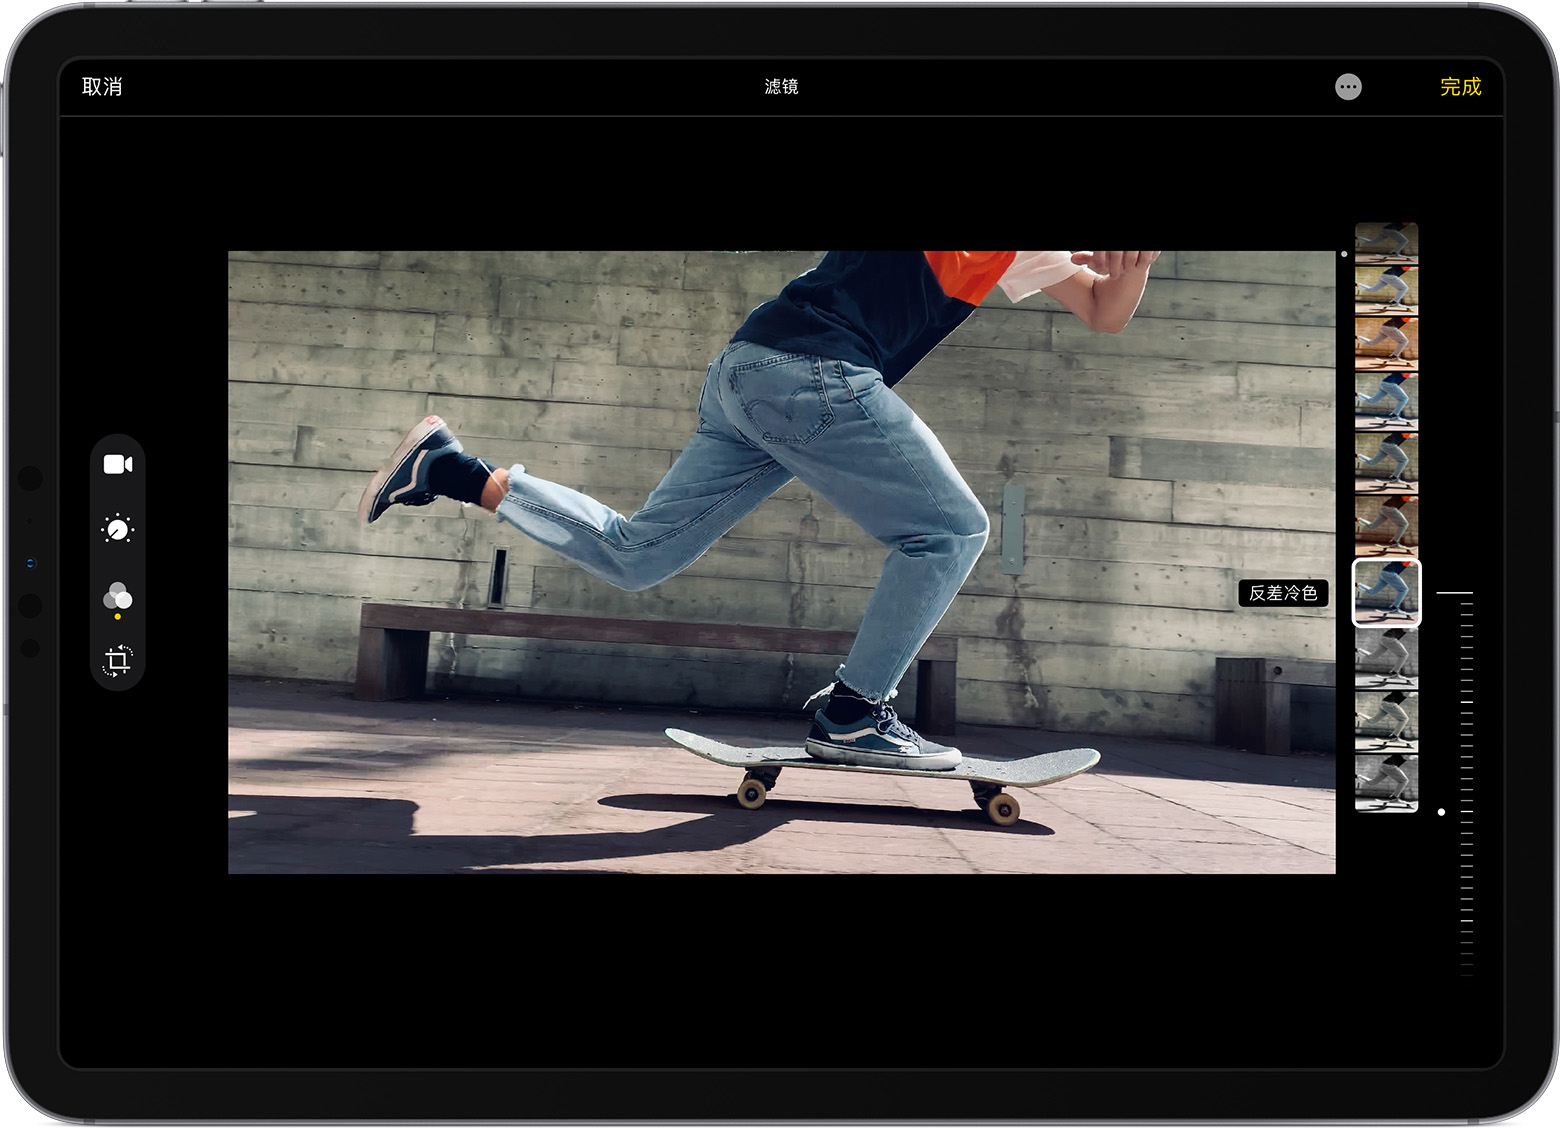 iPad 显示正在对一个视频应用滤镜